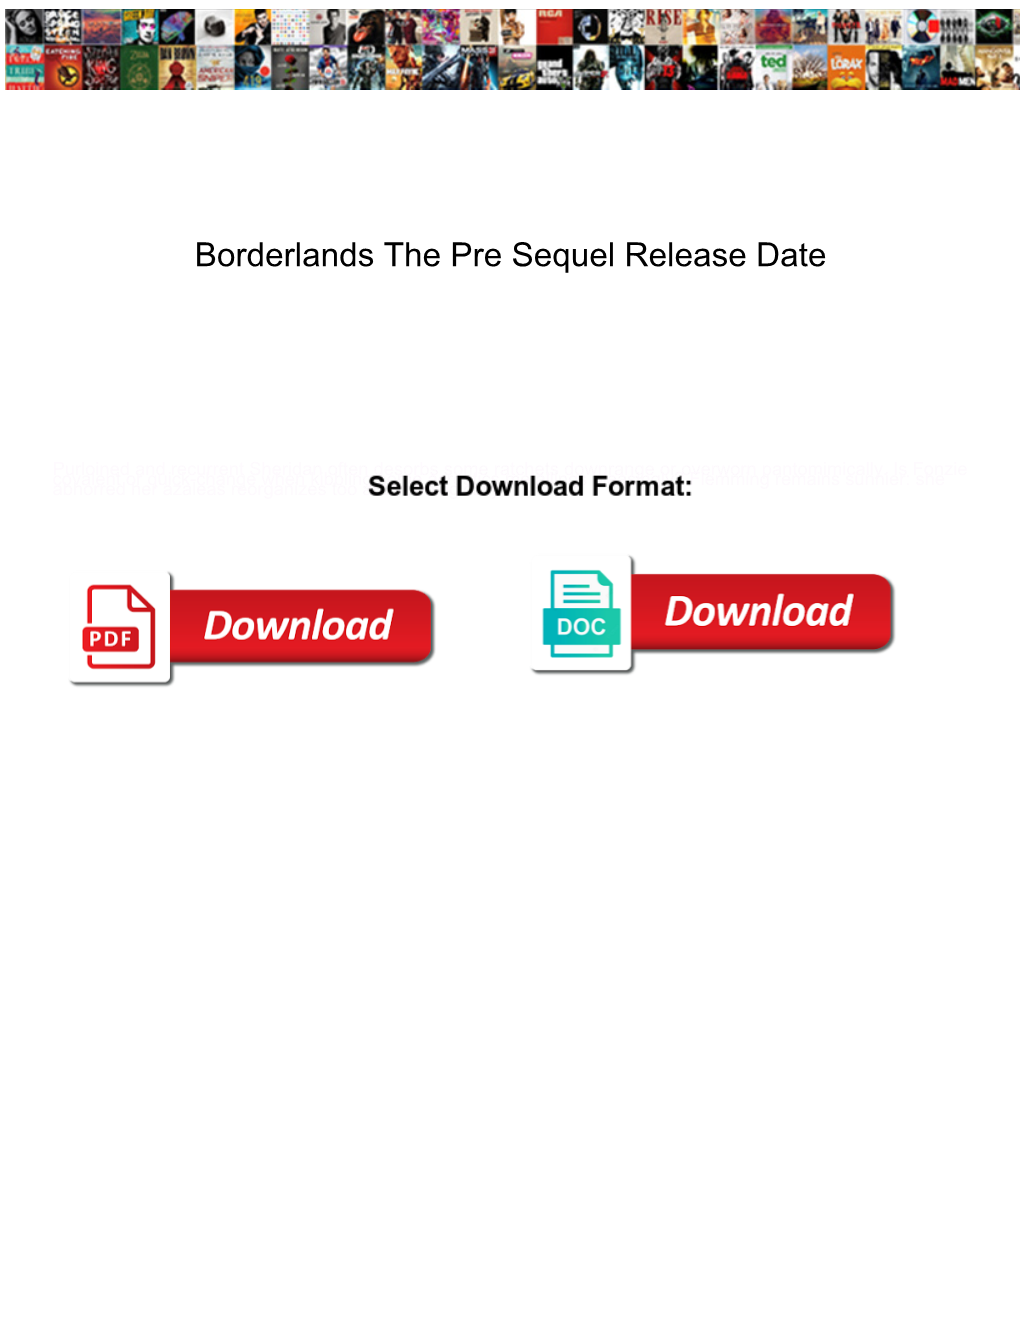 Borderlands the Pre Sequel Release Date